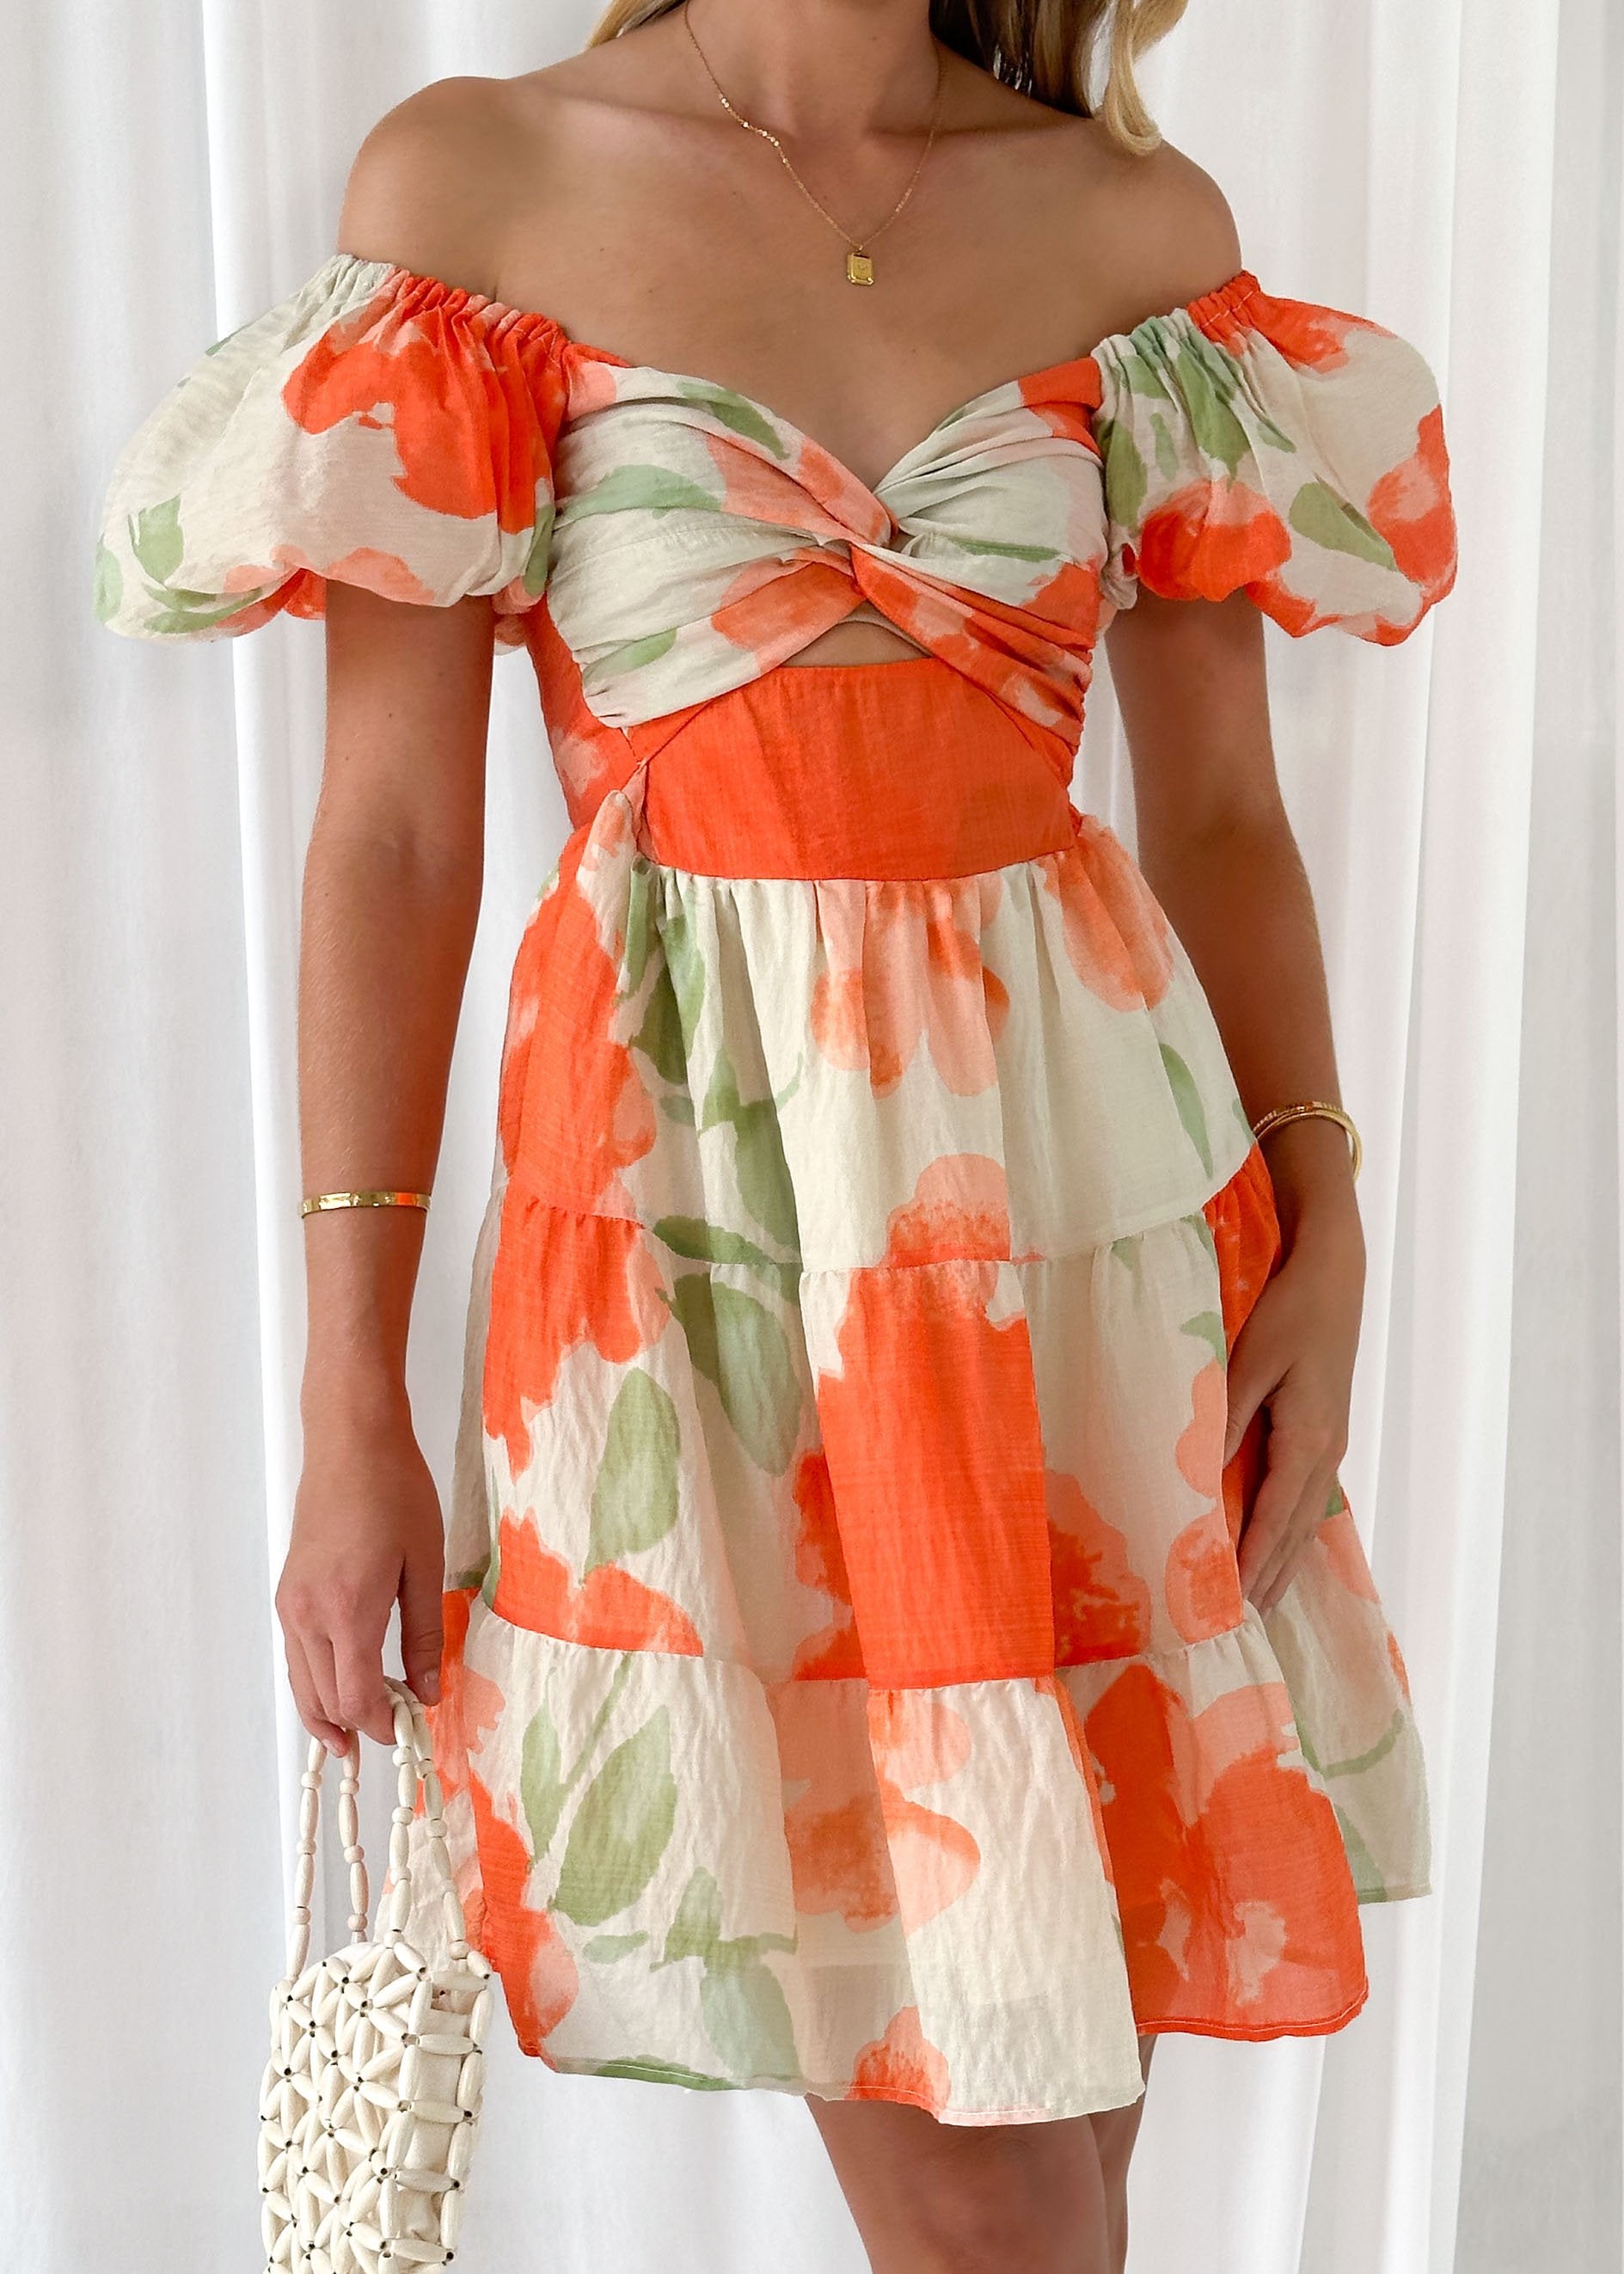 Kraylo Dress - Tangerine Flowers